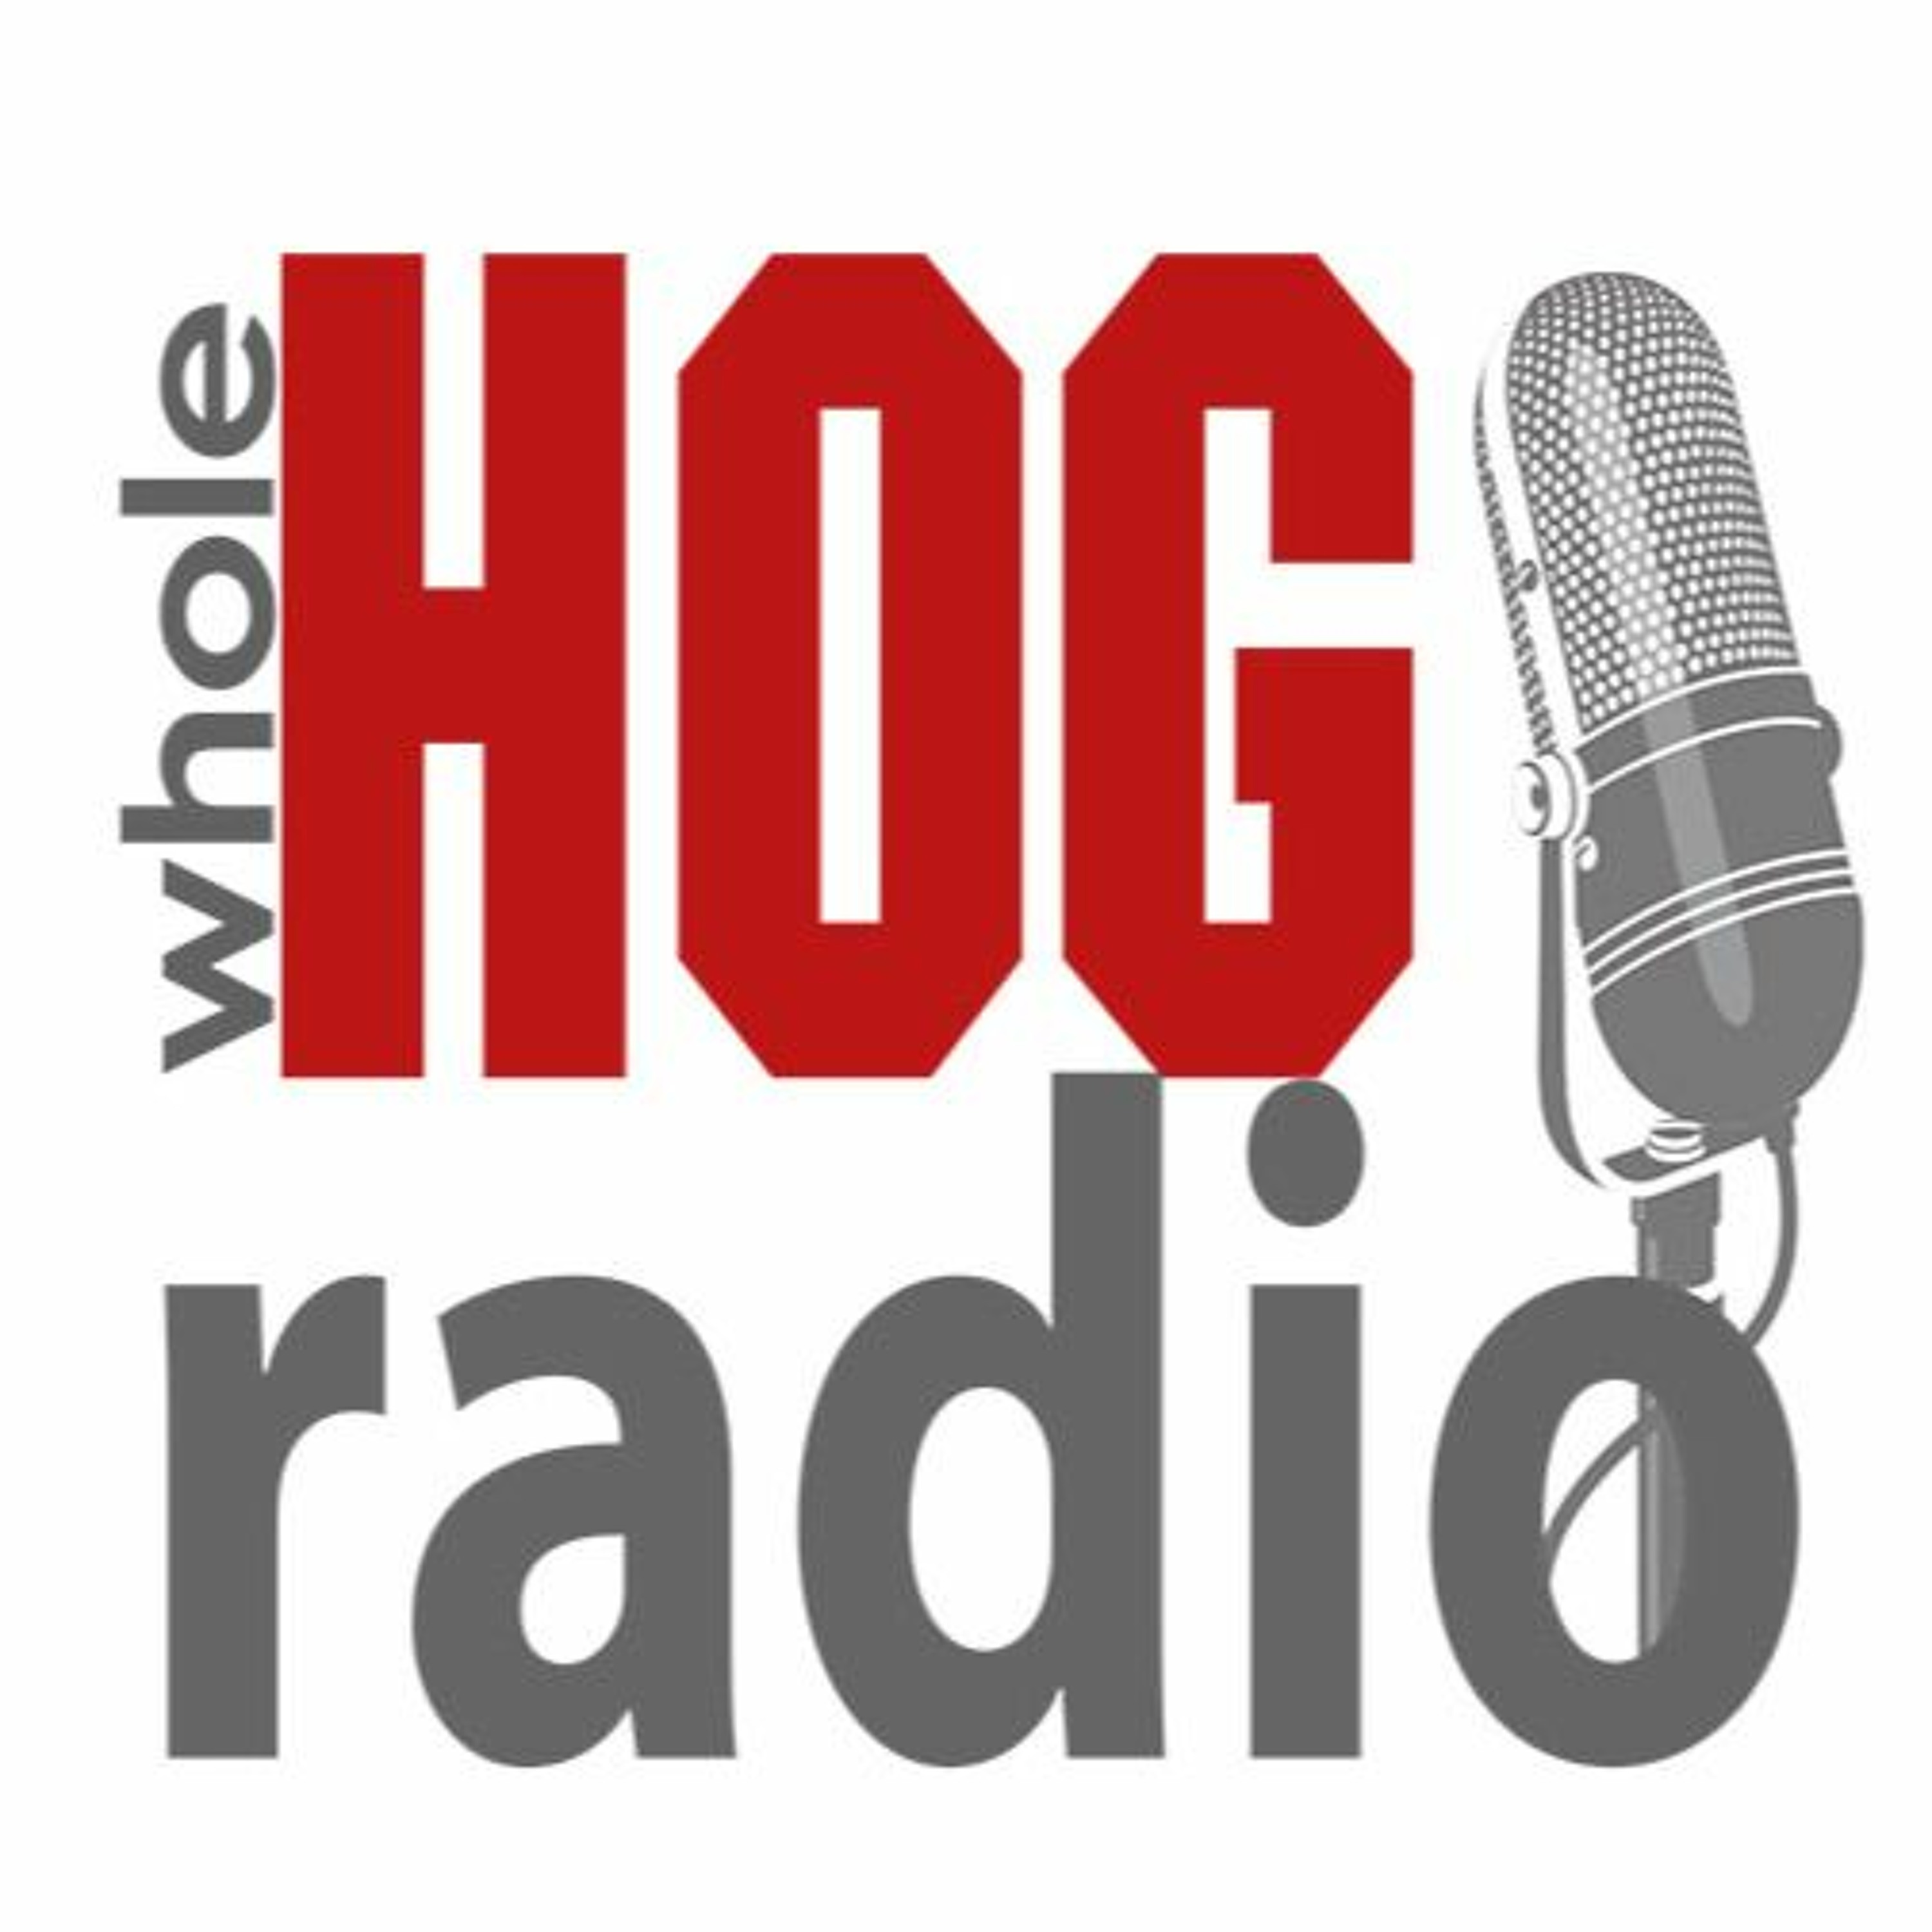 WholeHog Podcast: Arkansas vs LSU preview